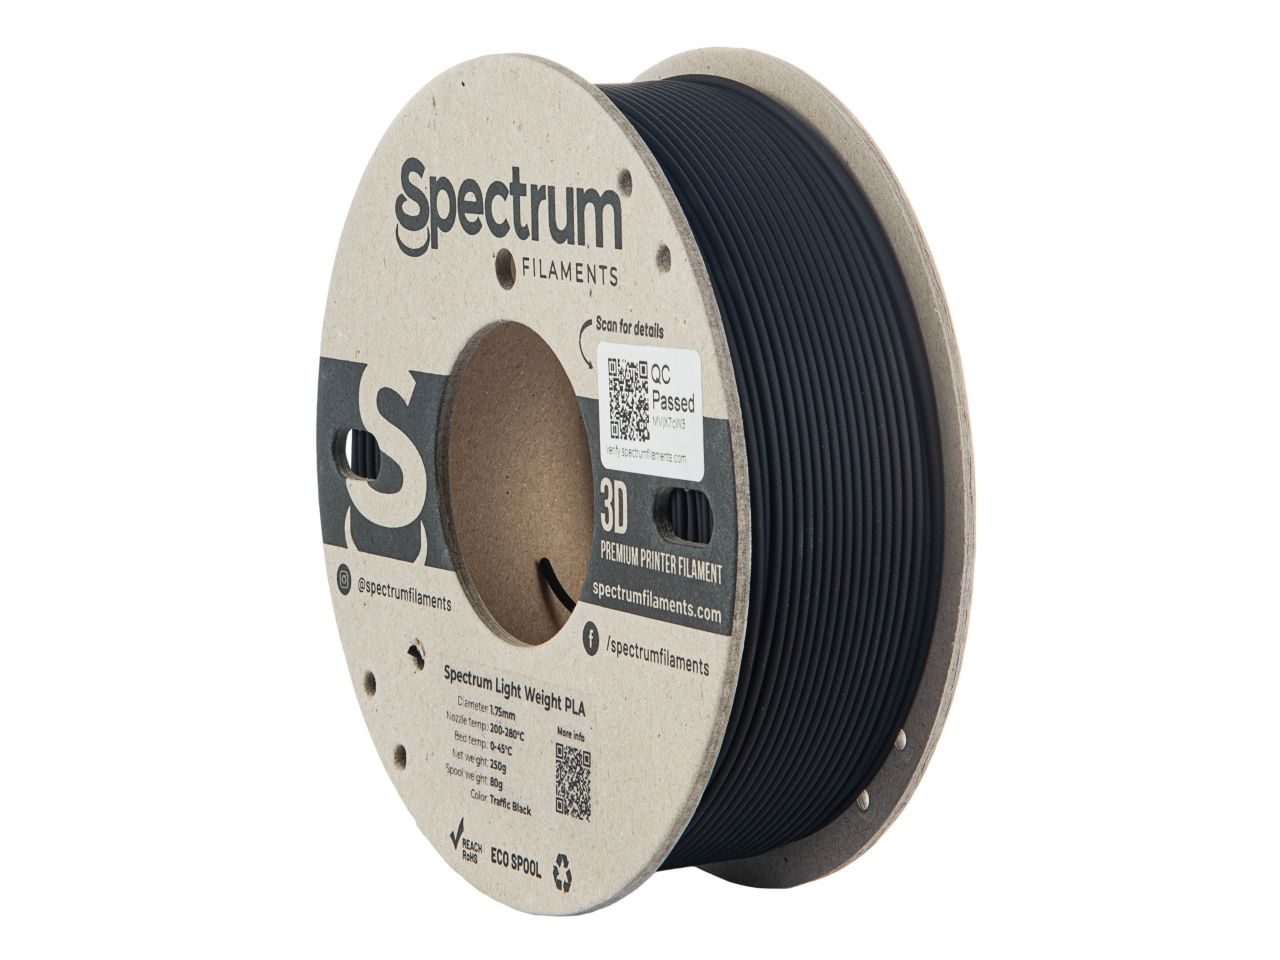 Spectrum Light Weight PLA 1.75mm, Traffic Black, 81000, 0.25kg